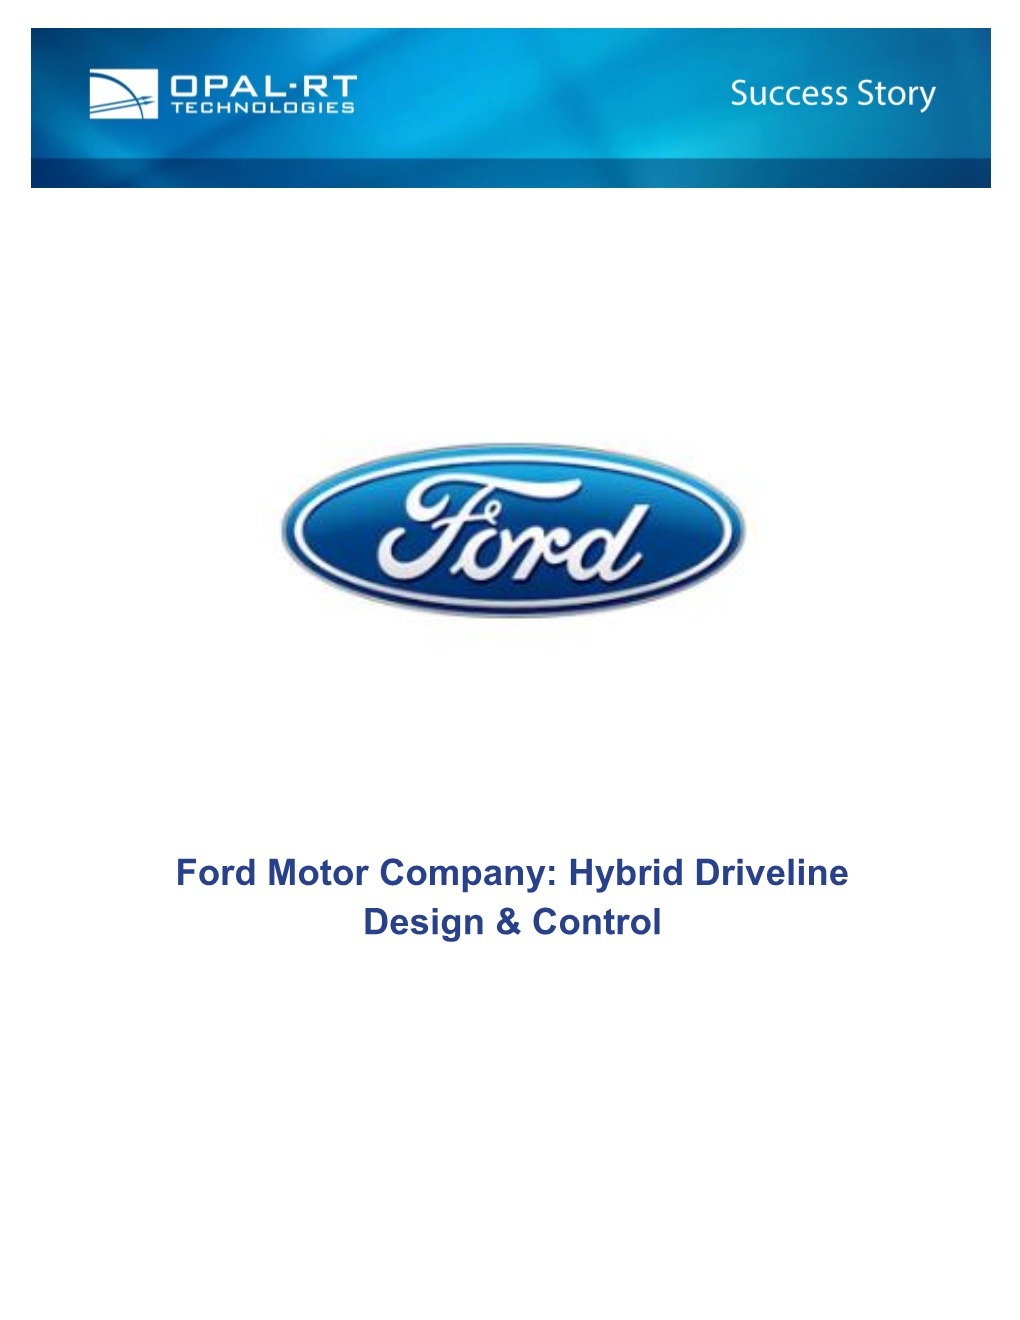 Ford Motor Company: Hybrid Driveline Design & Control